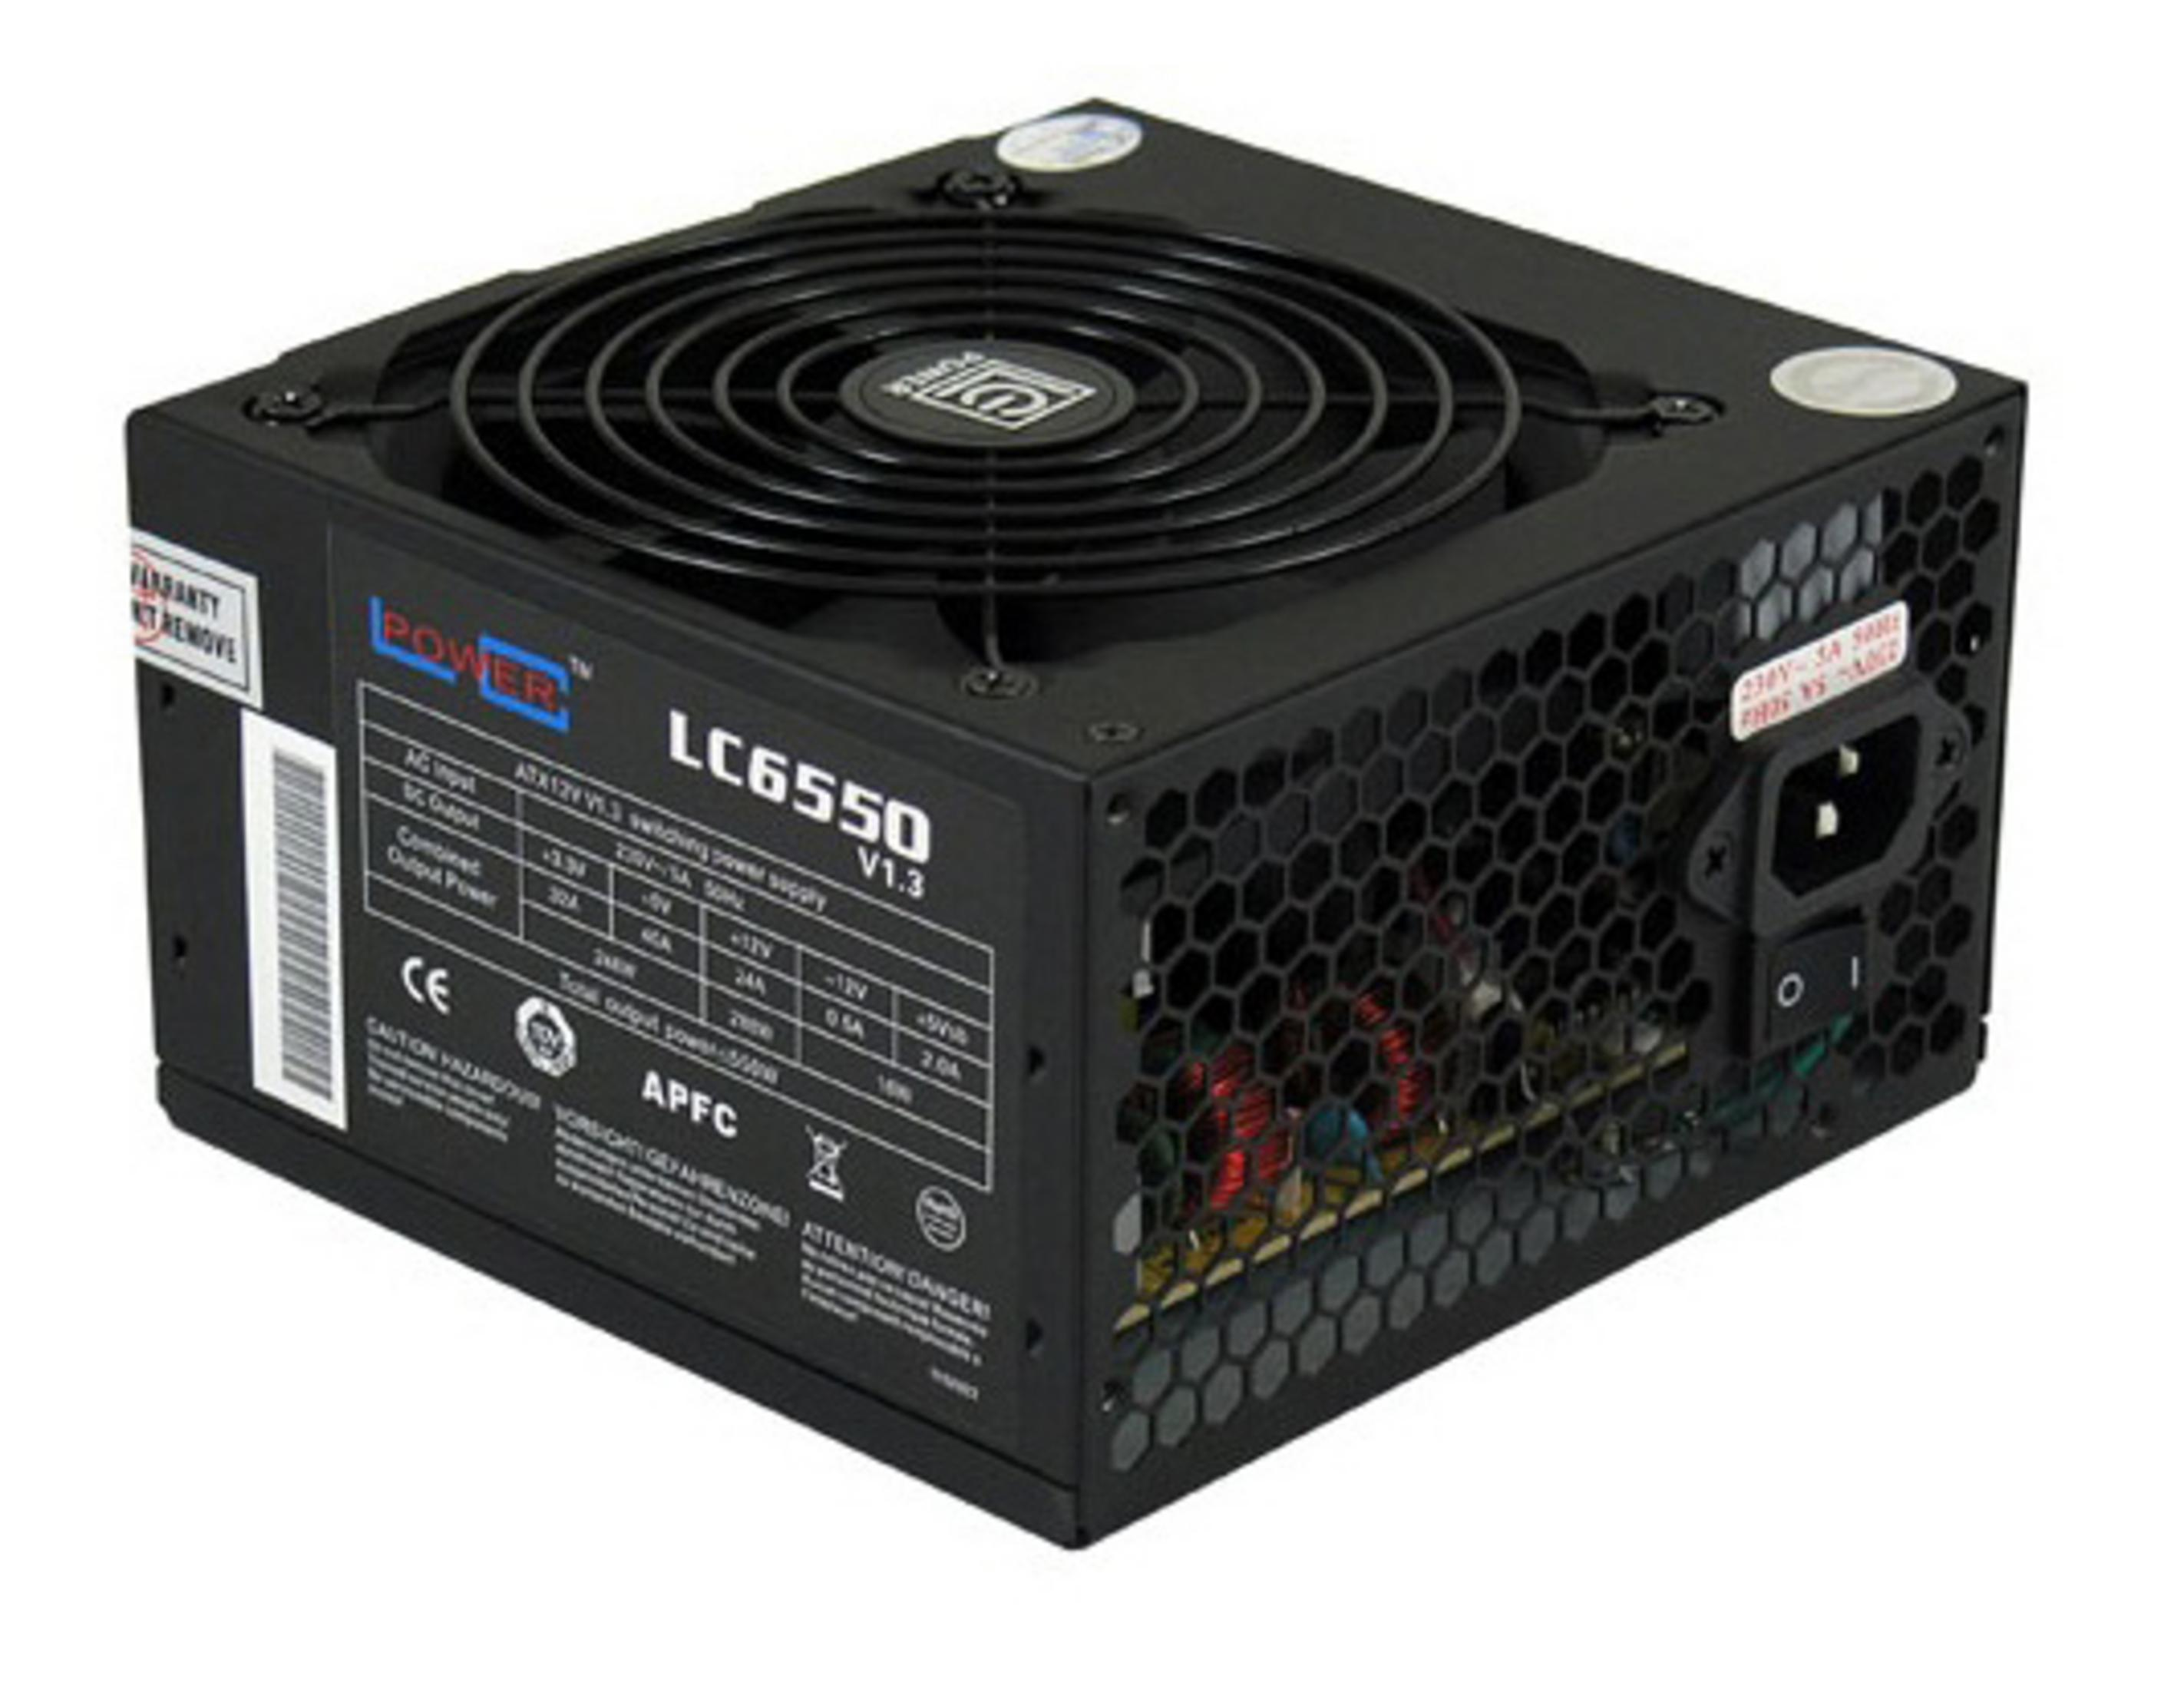 Netzteile Super-Silent-Serie, LC 550 POWER Watt V2.3, LC6550 80+ LC-Power ATX-Netzteil 550W, Strom